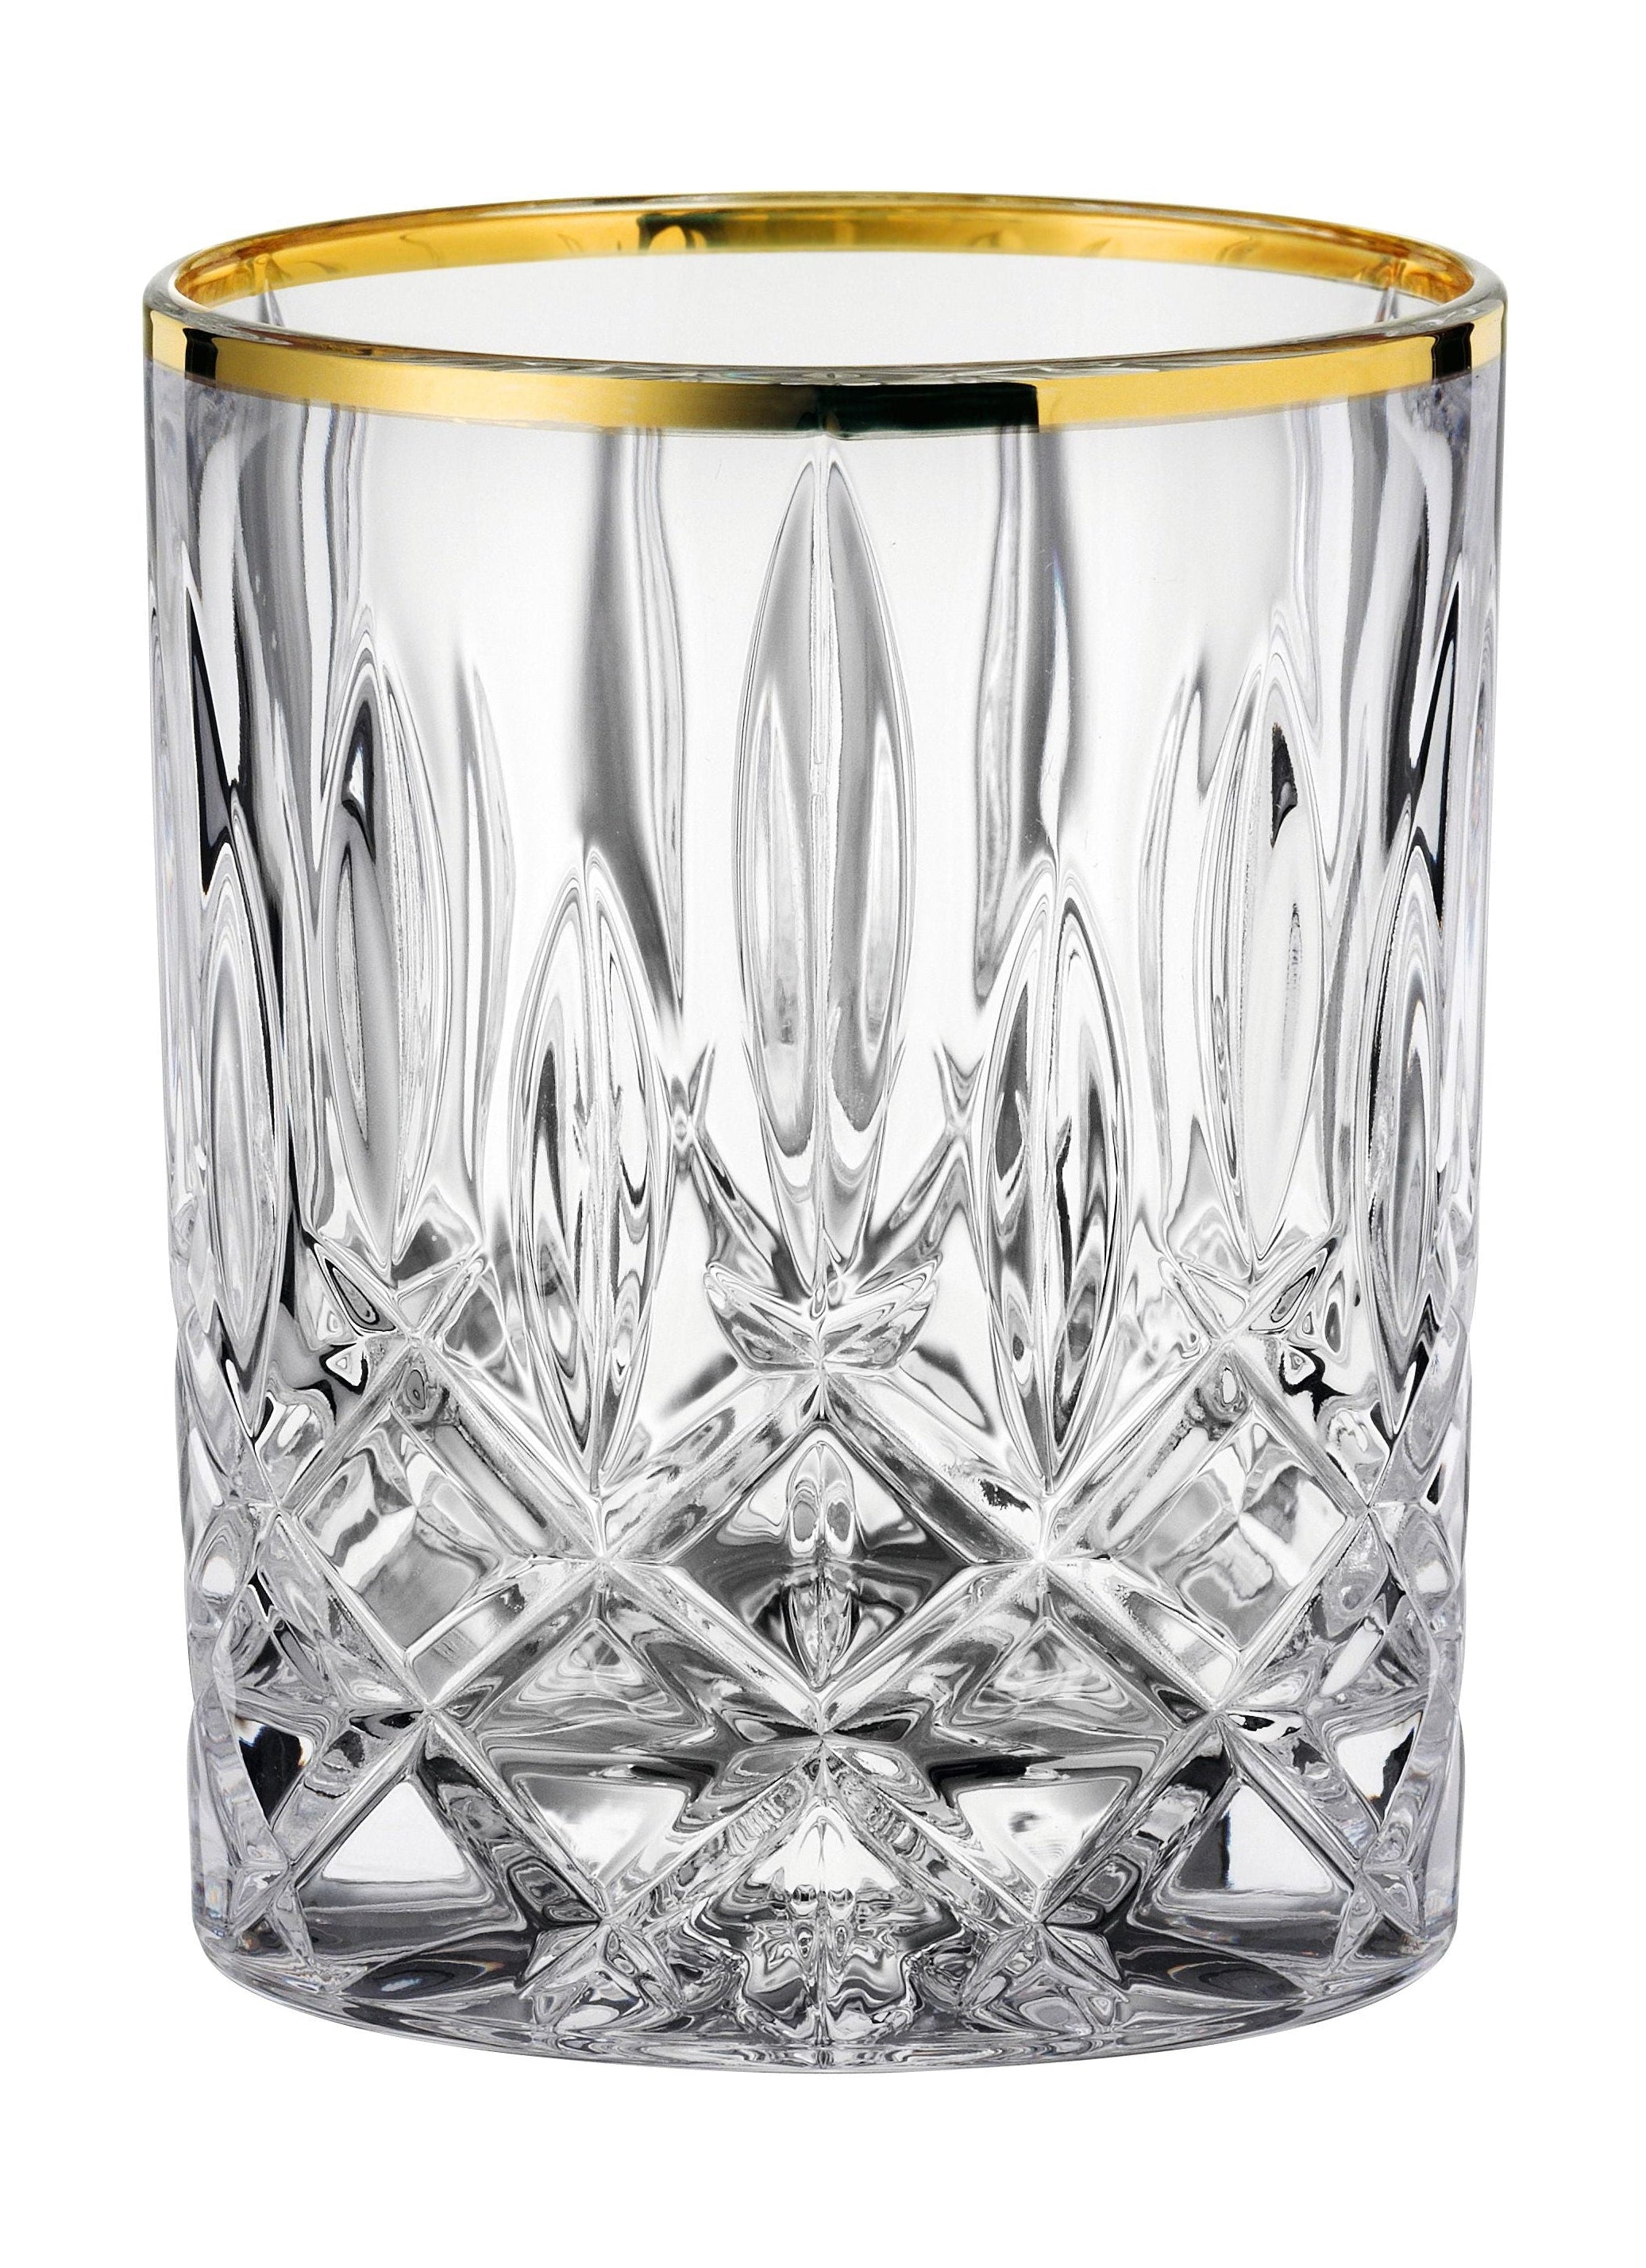 Nachtmann Noblesse Gold Whisky Glass 295 ml, juego de 2